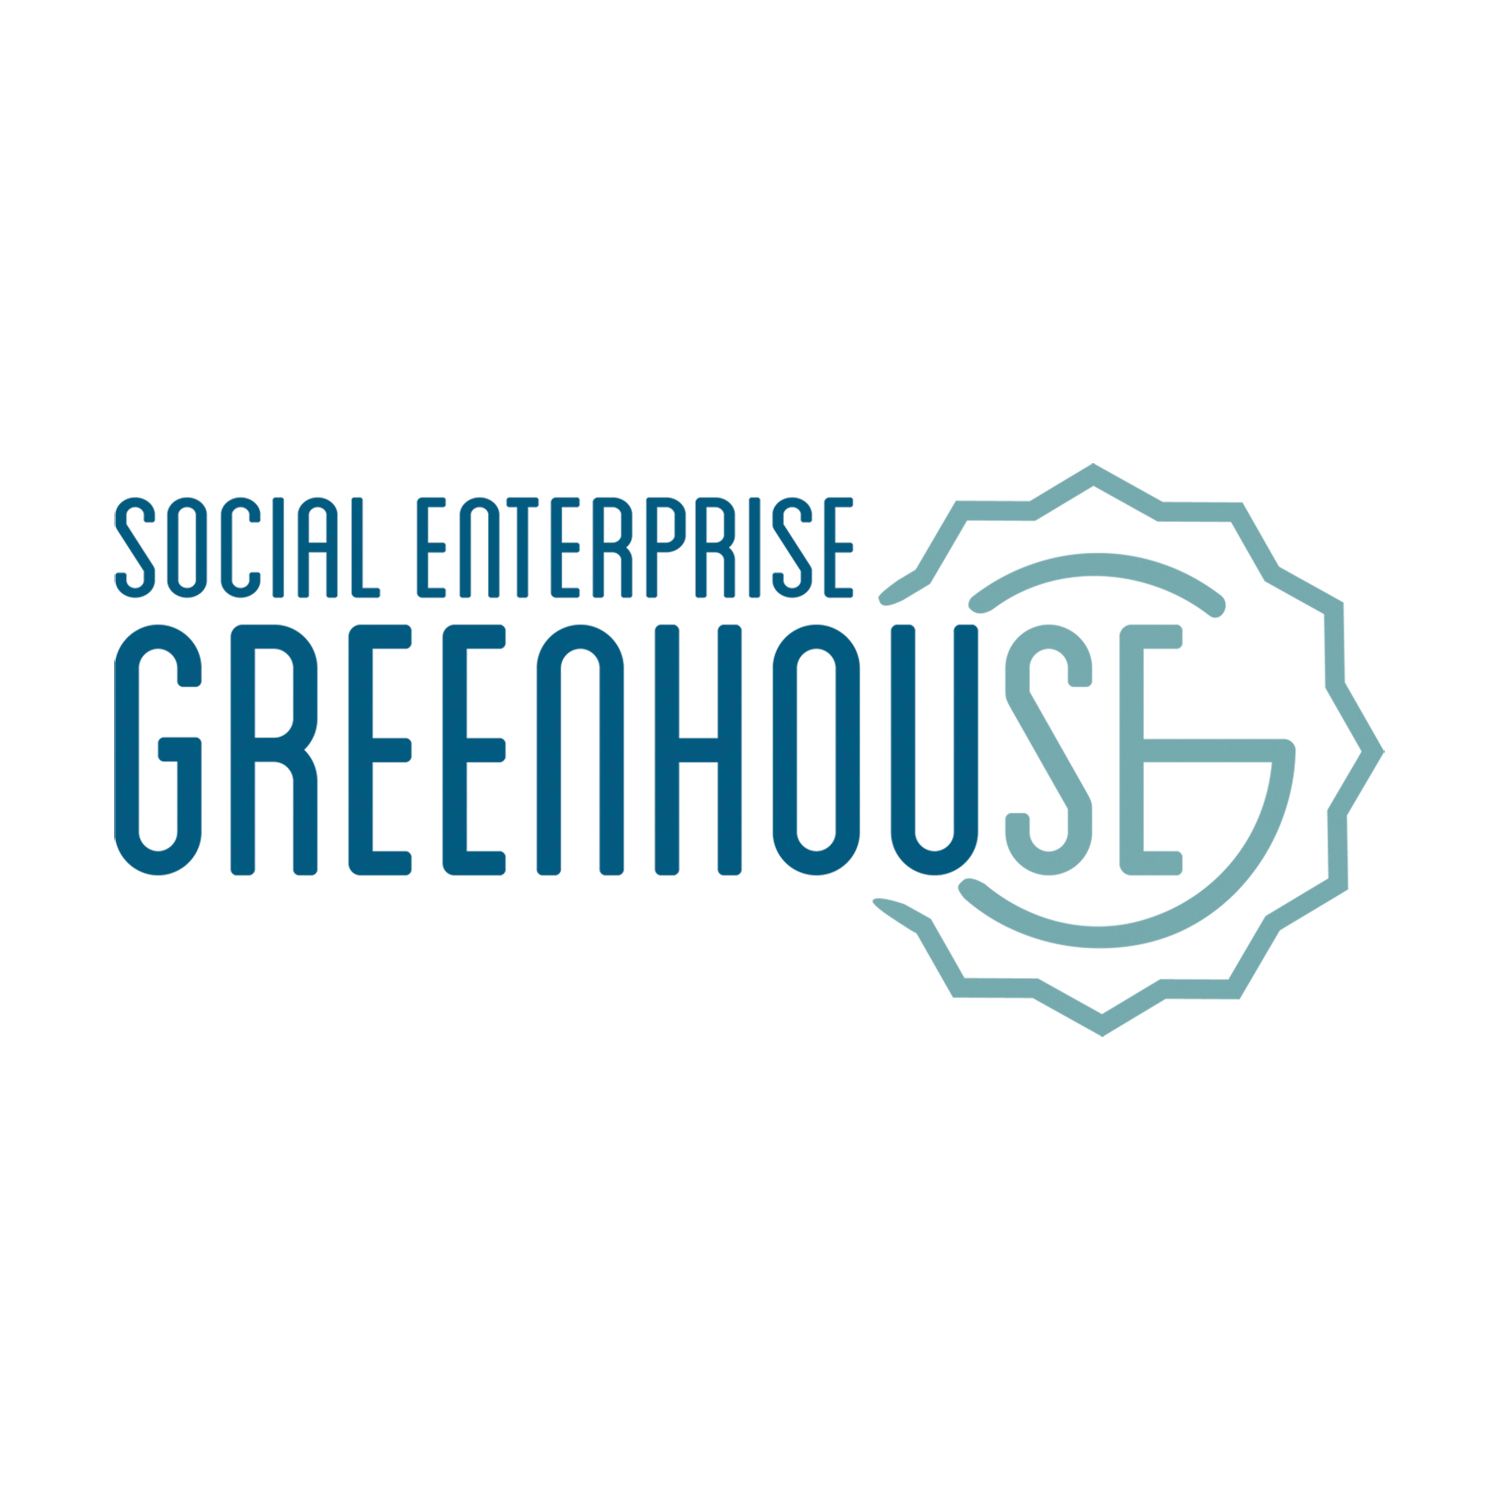 Social Enterprise Greenhouse Announces Spring 2021 Virtual Incubator Program for Entrepreneurs and Small Businesses